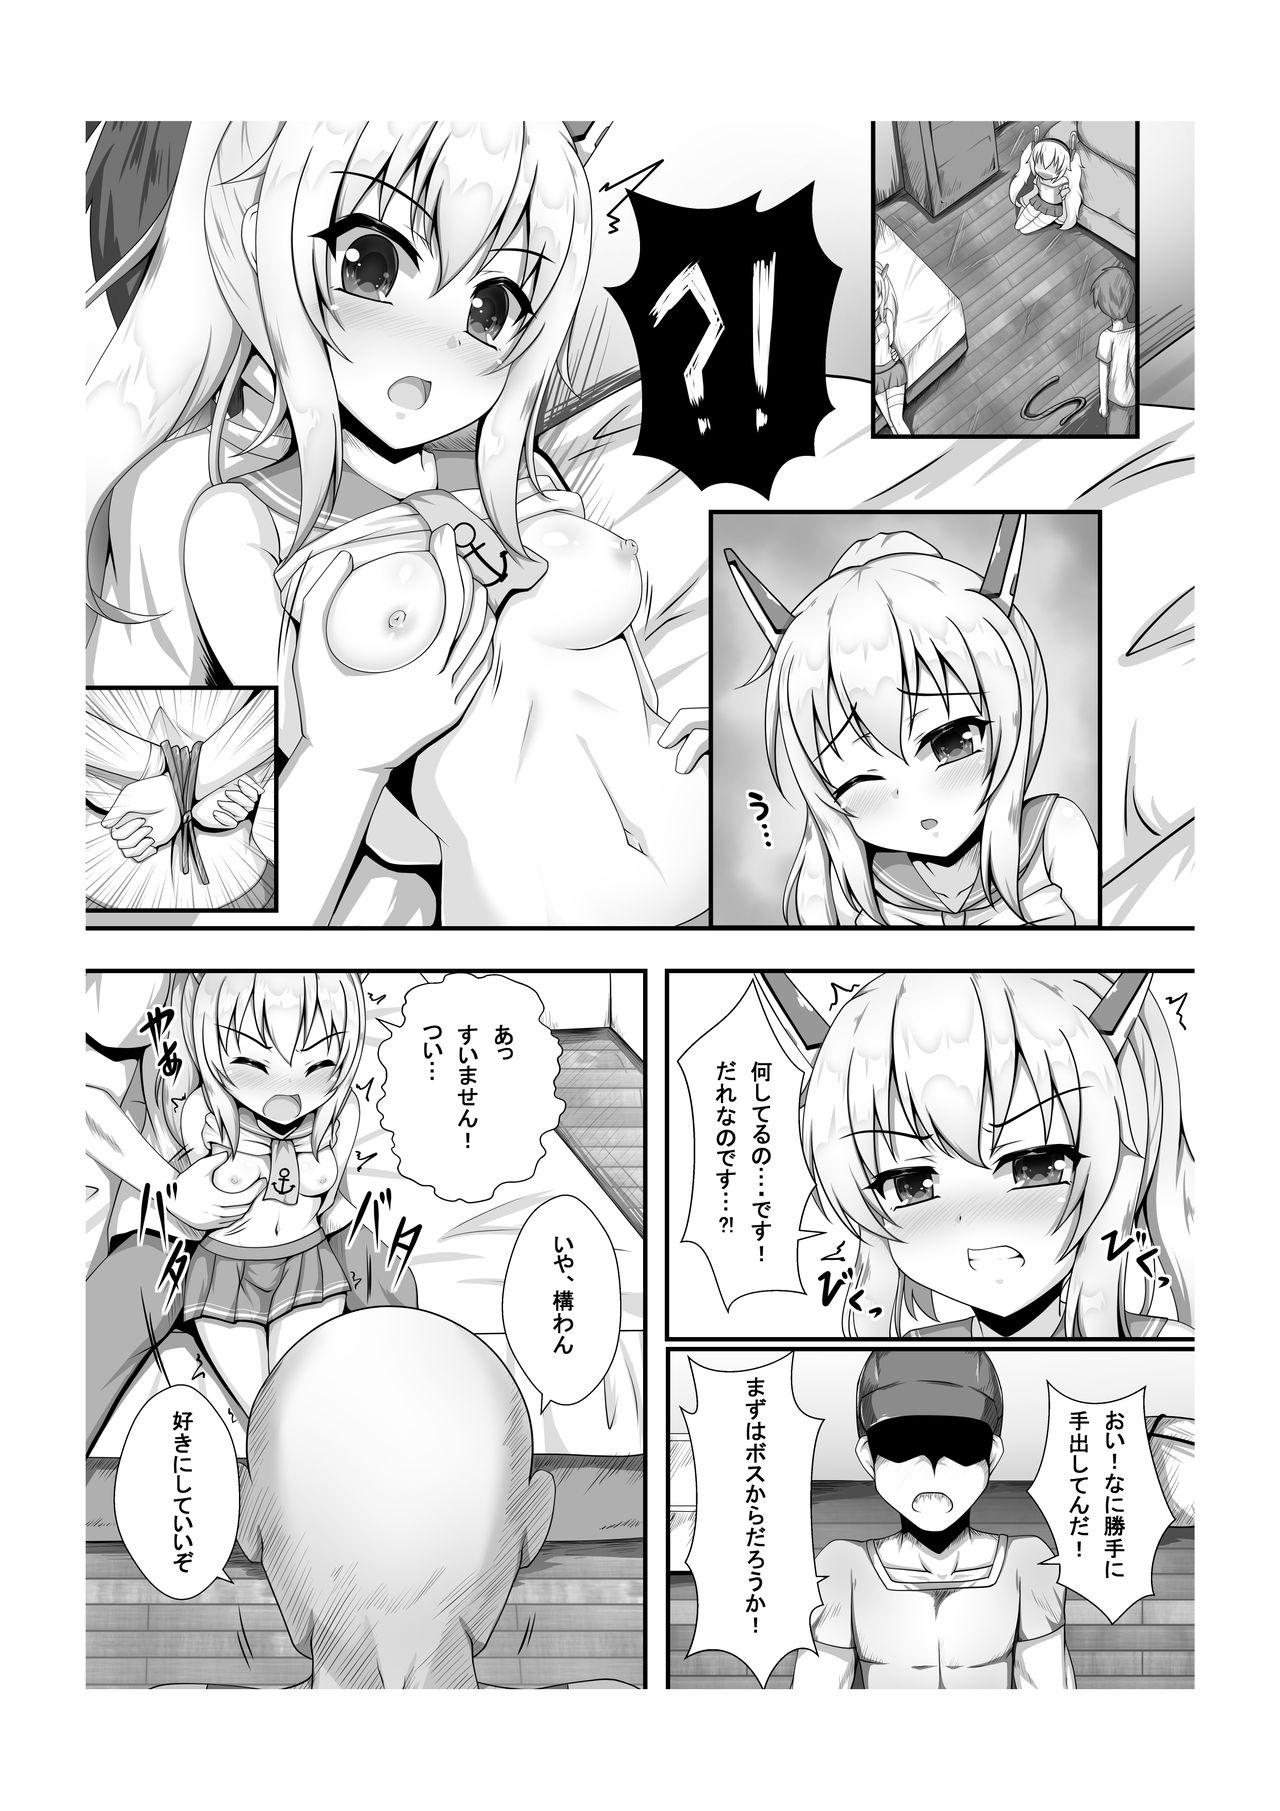 Sex Toy Kokoro Lost + Omake CG - Azur lane Scene - Page 5